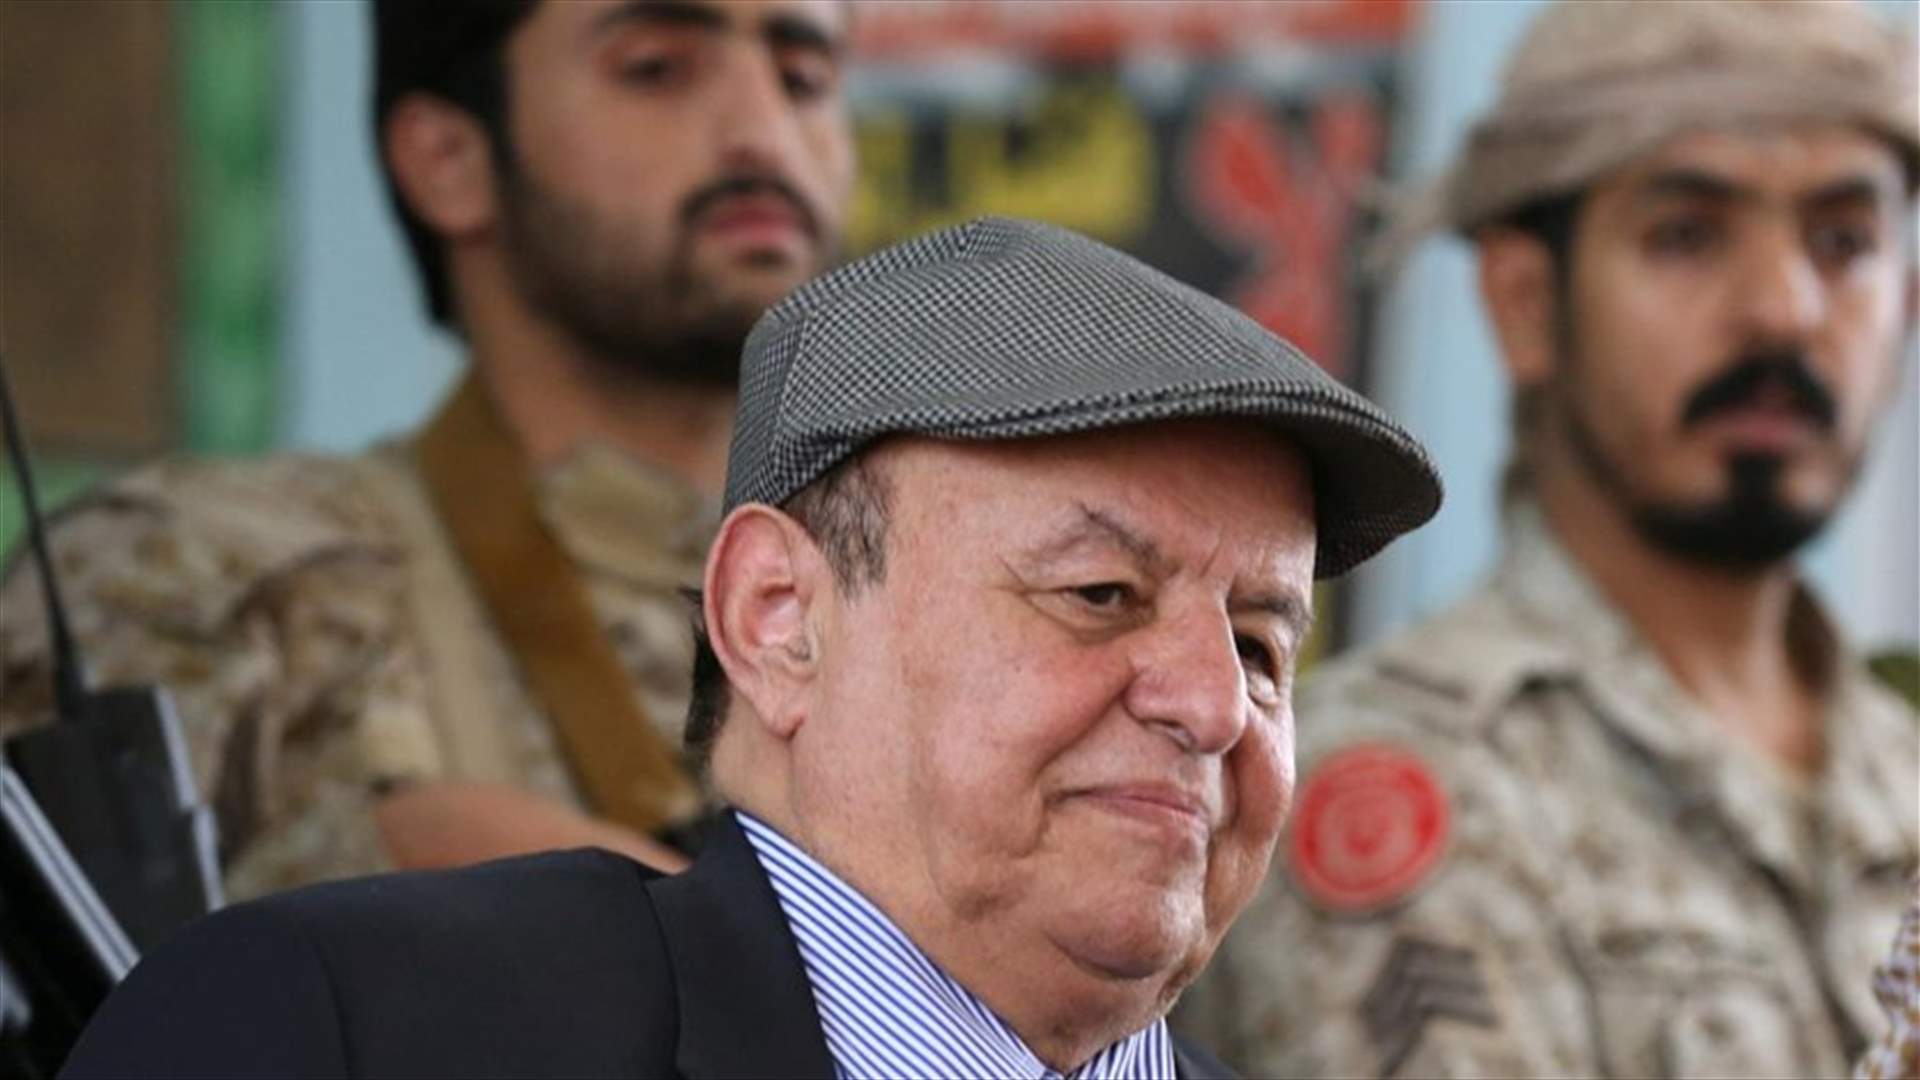 Yemen leader-in-exile Hadi returns for meeting of divided parliament